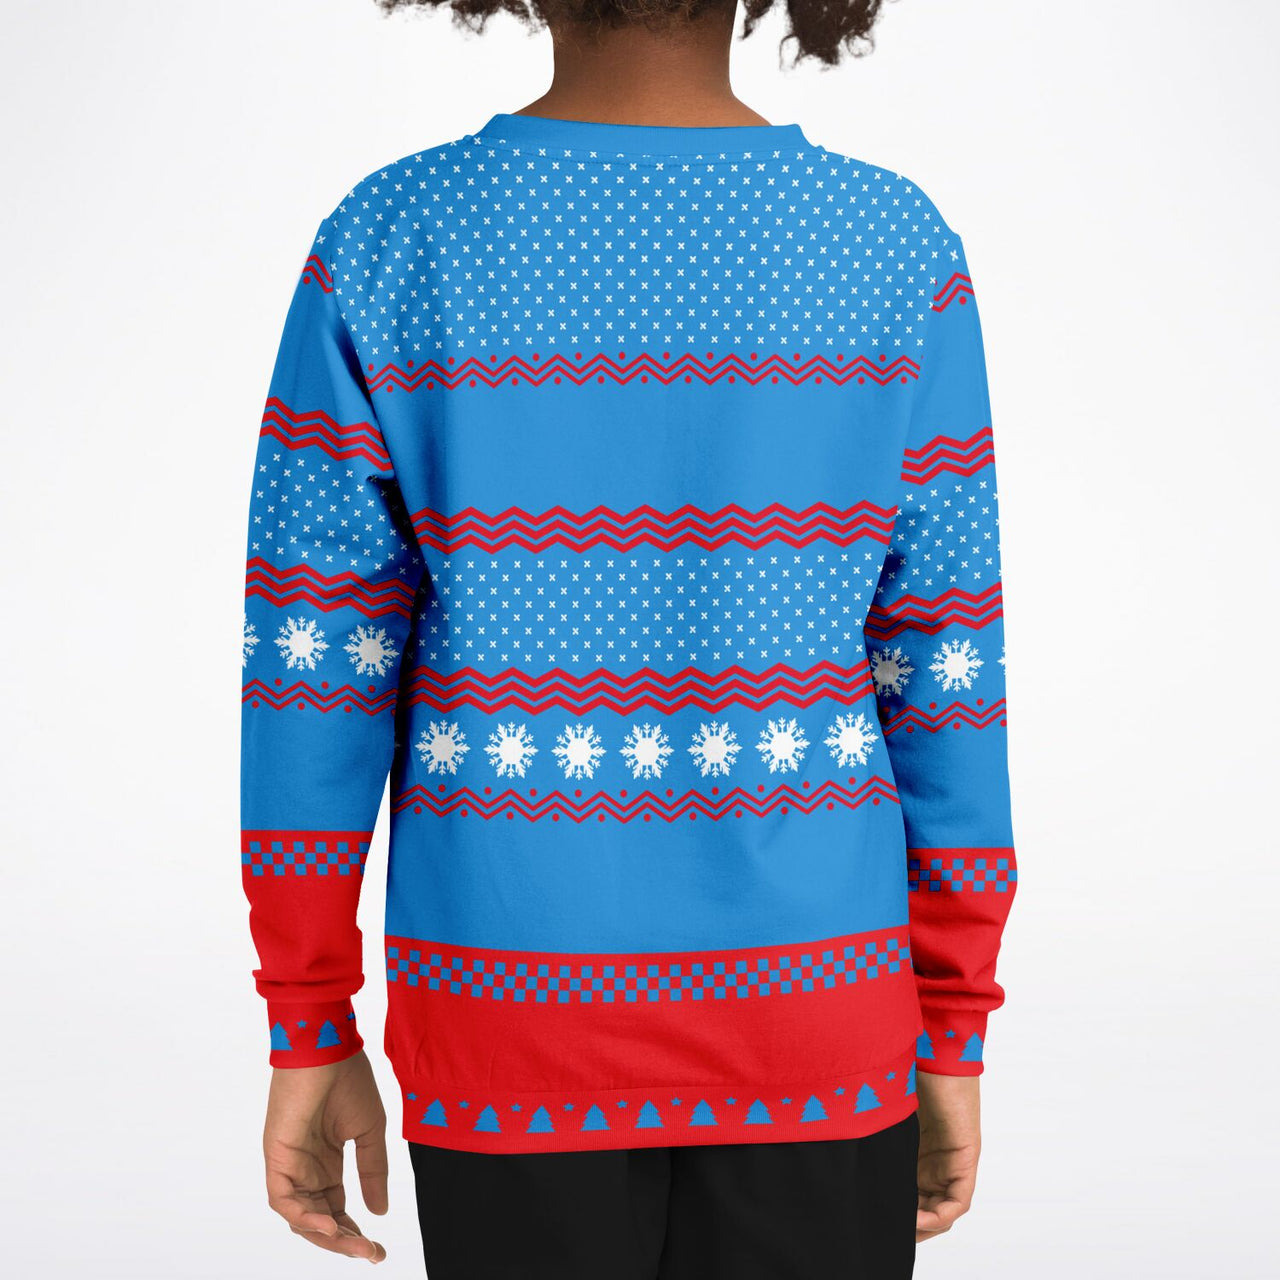 Meowy Ugly Christmas Fashion Youth Sweatshirt – Youth AOP